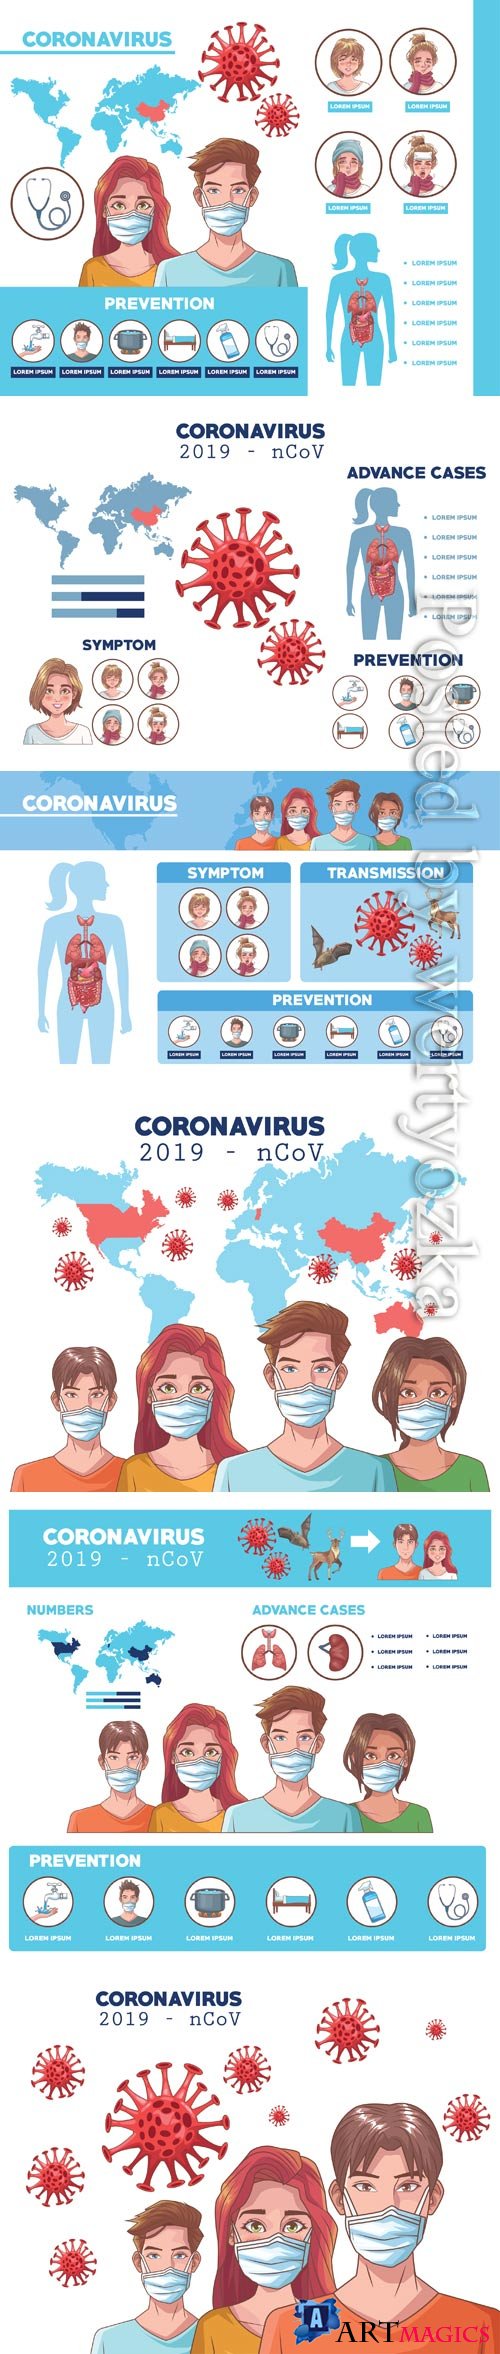 Coronavirus infographic with symptom and prevention